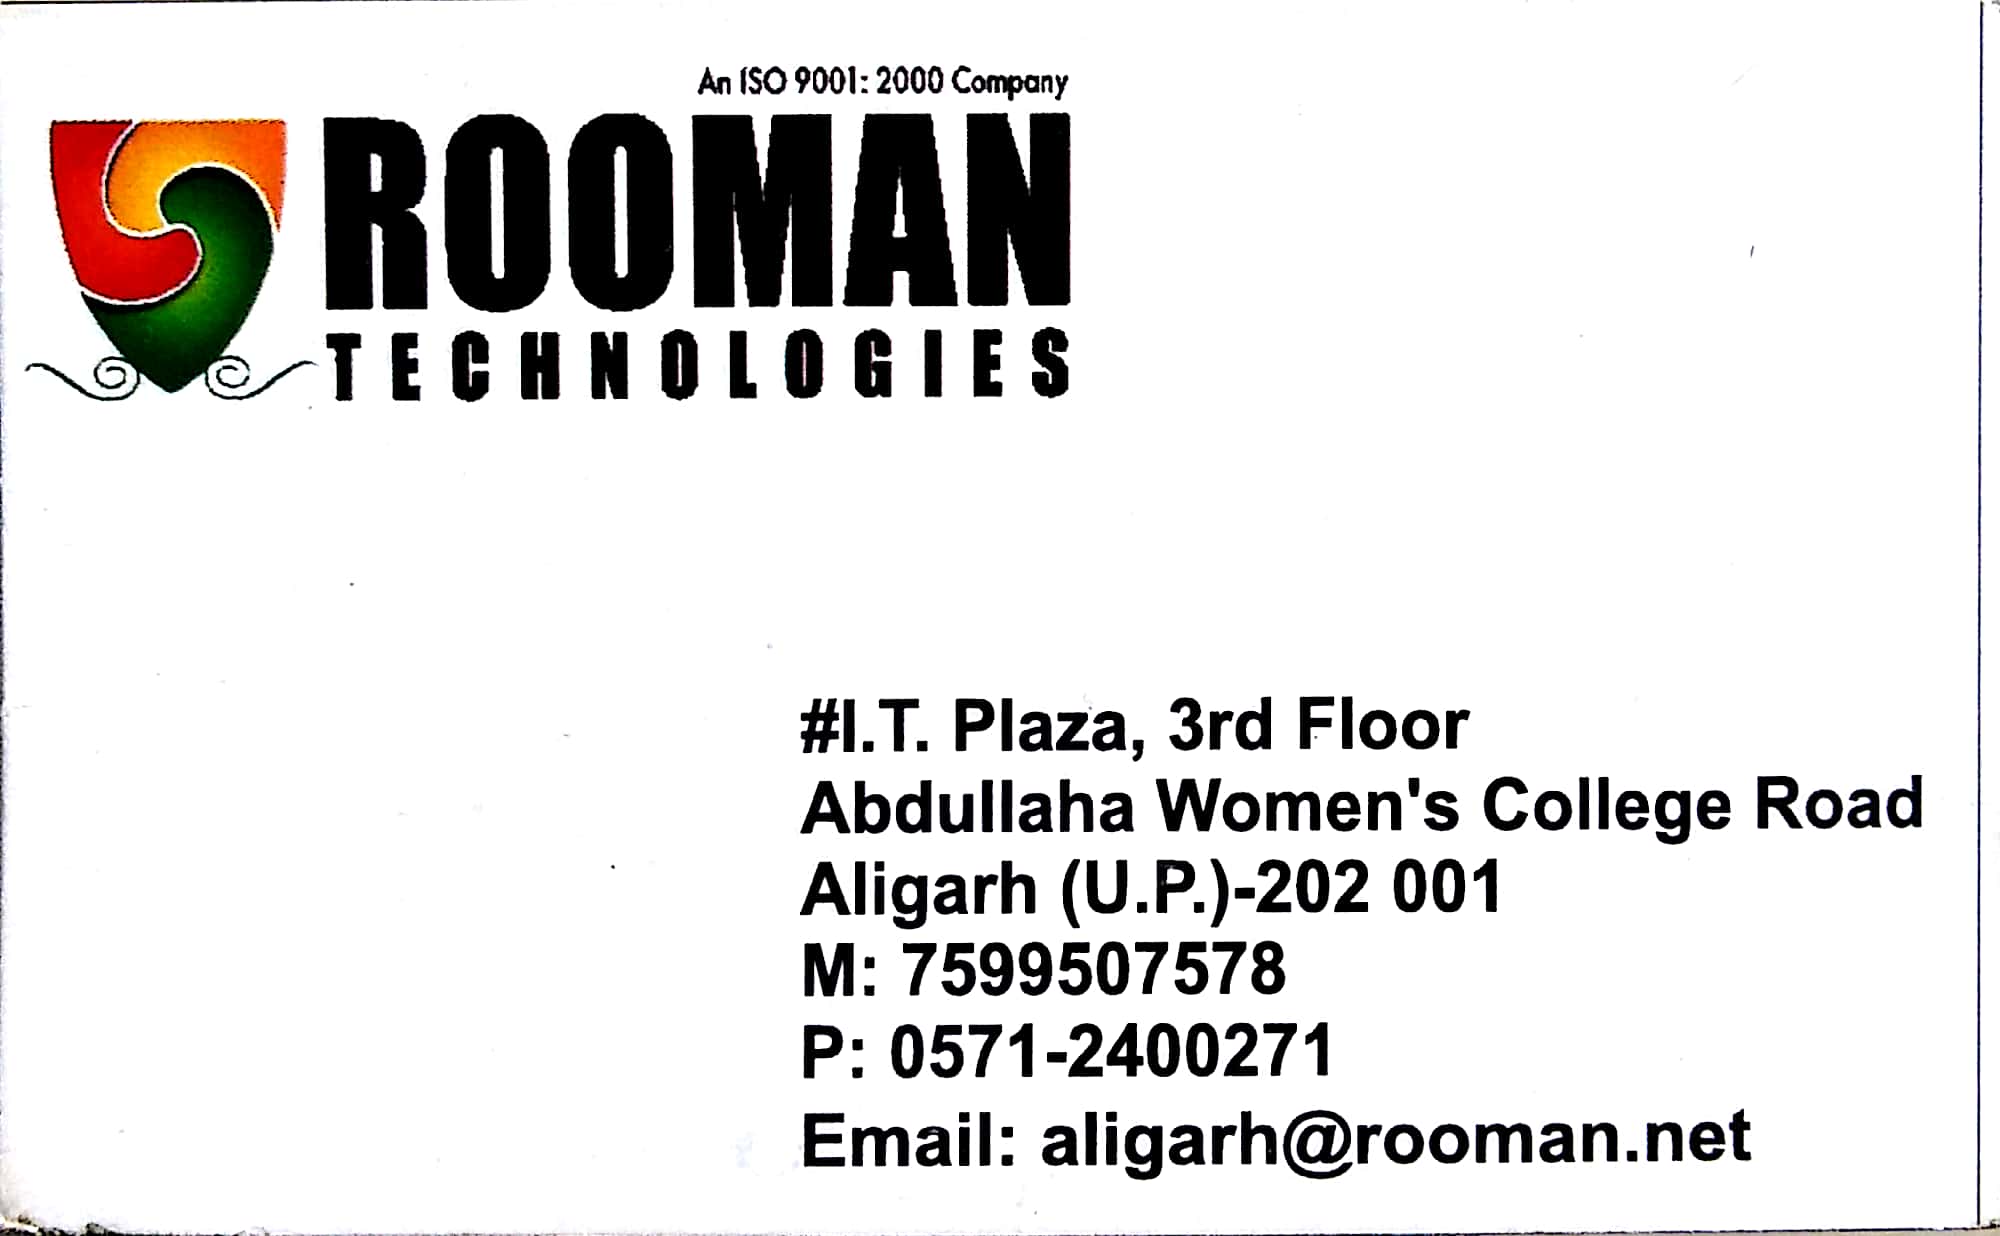 ROOMAN TECHNOLOGIES| BEST TECHNOLOGIES IN ALIGARH FAINS-BAZAAR